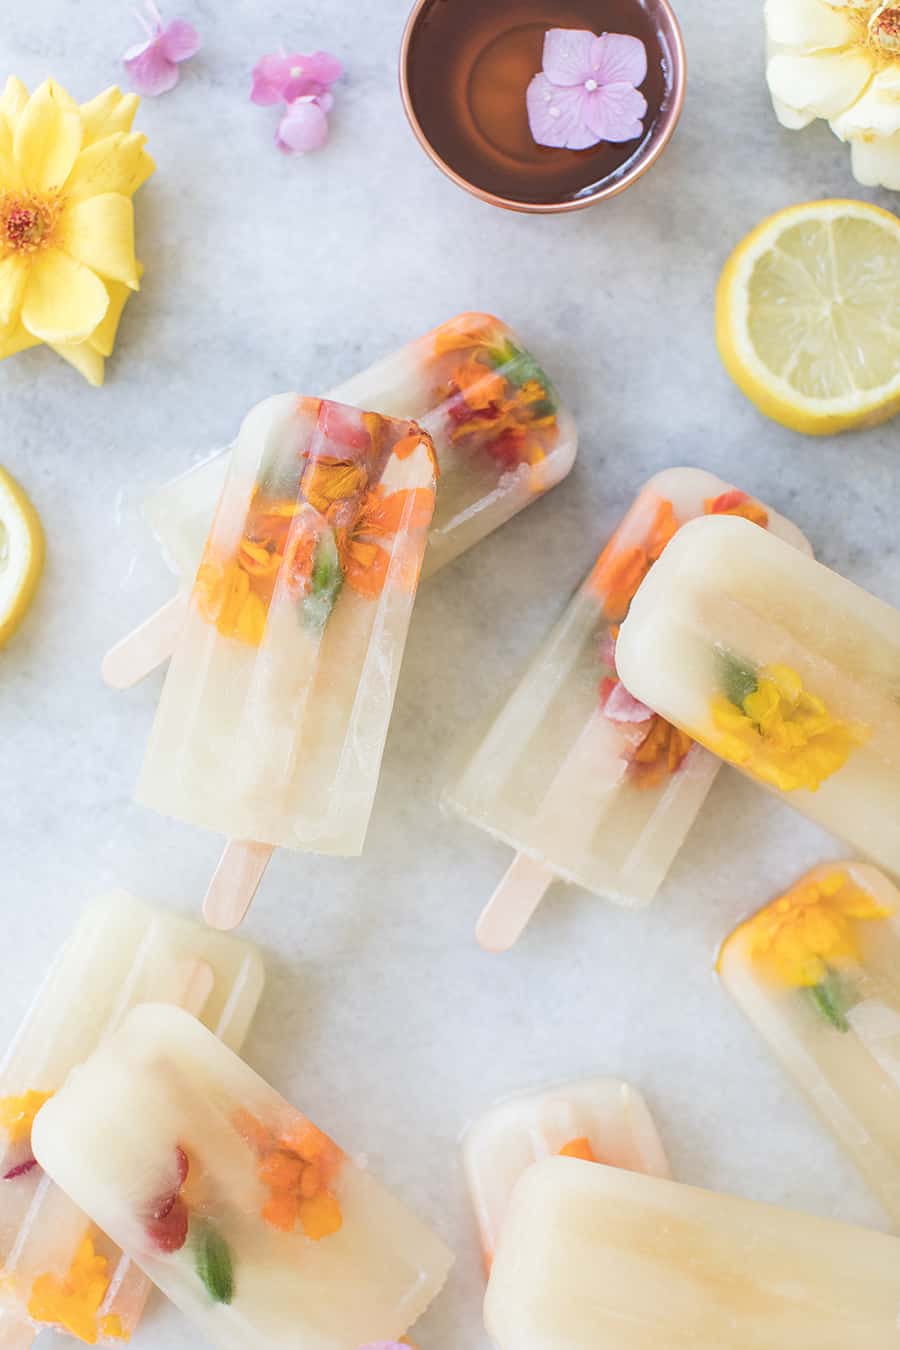 Homemade popsicles using lemonade and edible flowers.